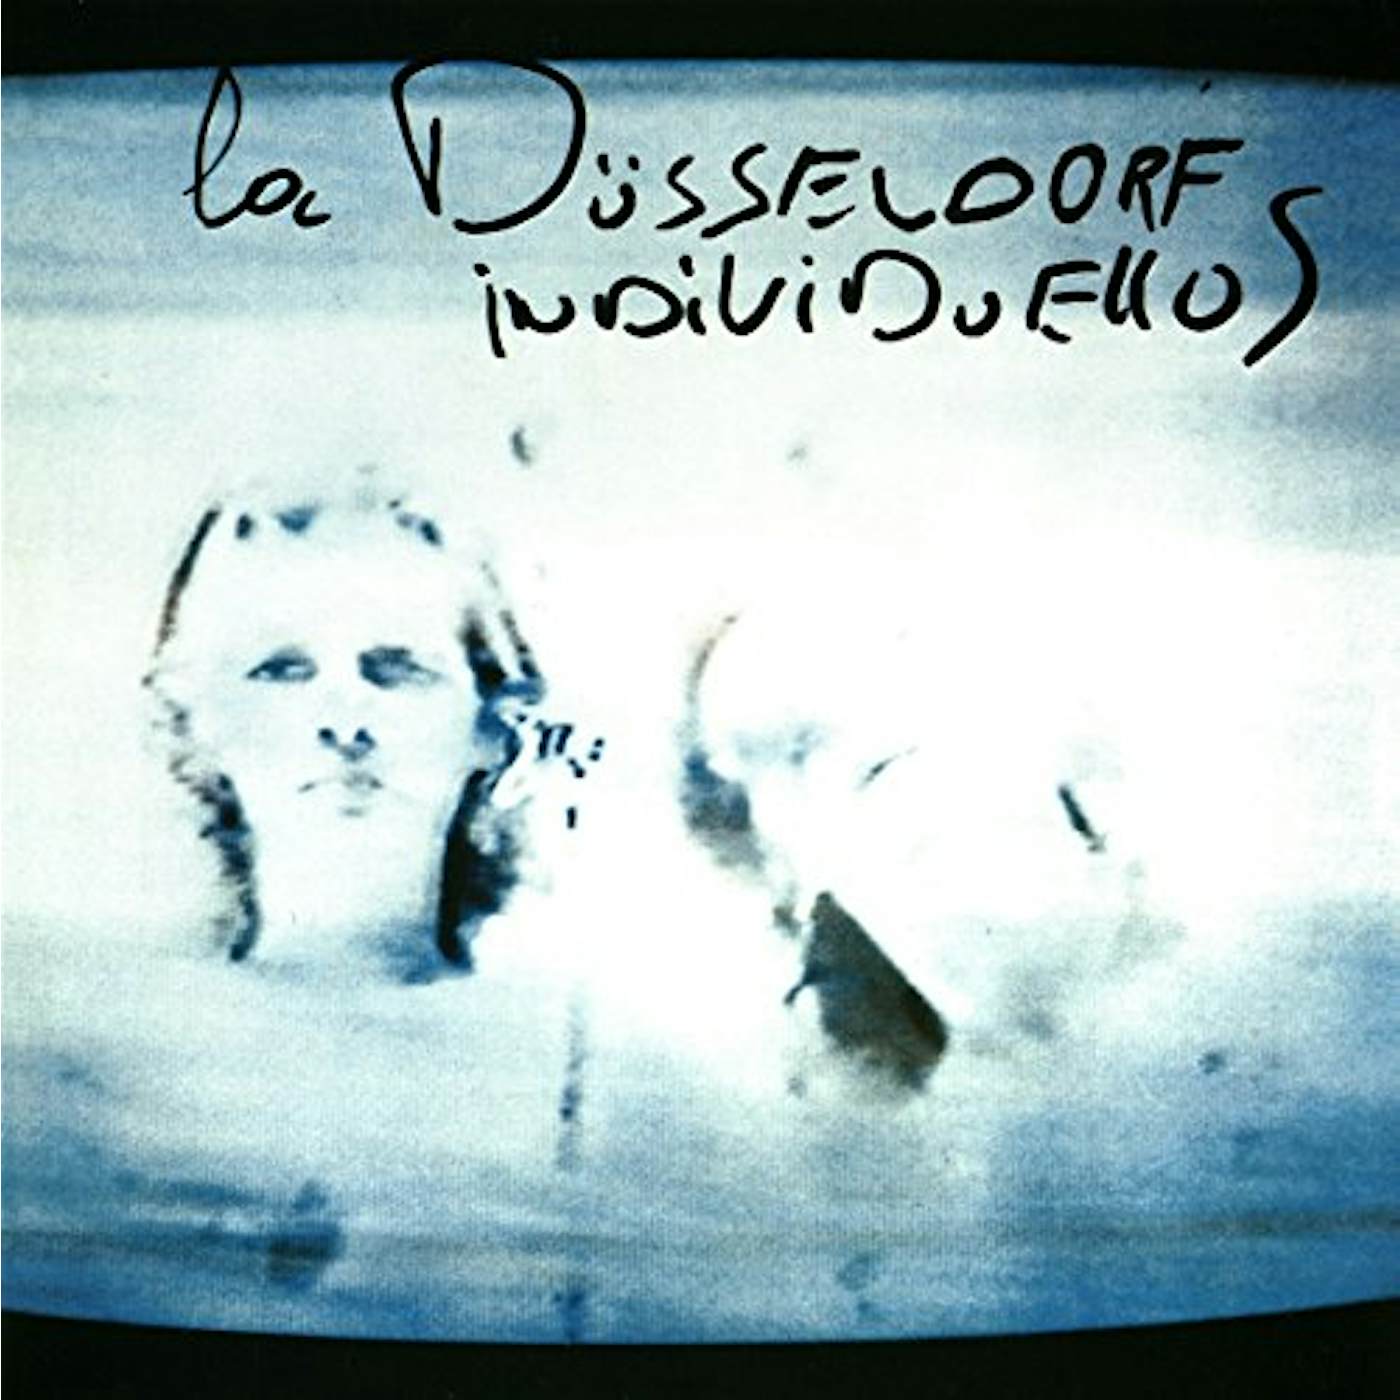 La Düsseldorf Individuellos Vinyl Record